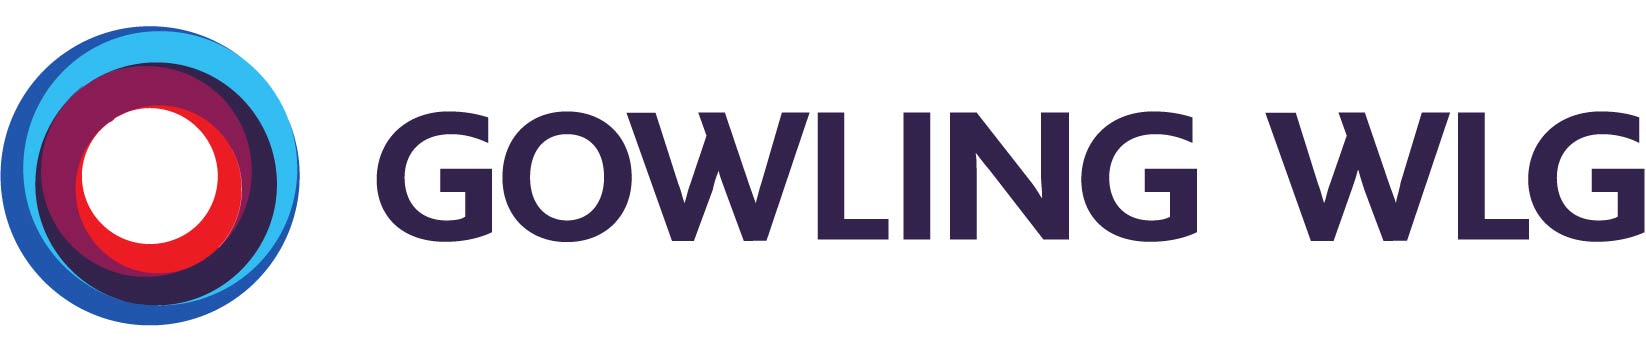 Gowling-logo-01